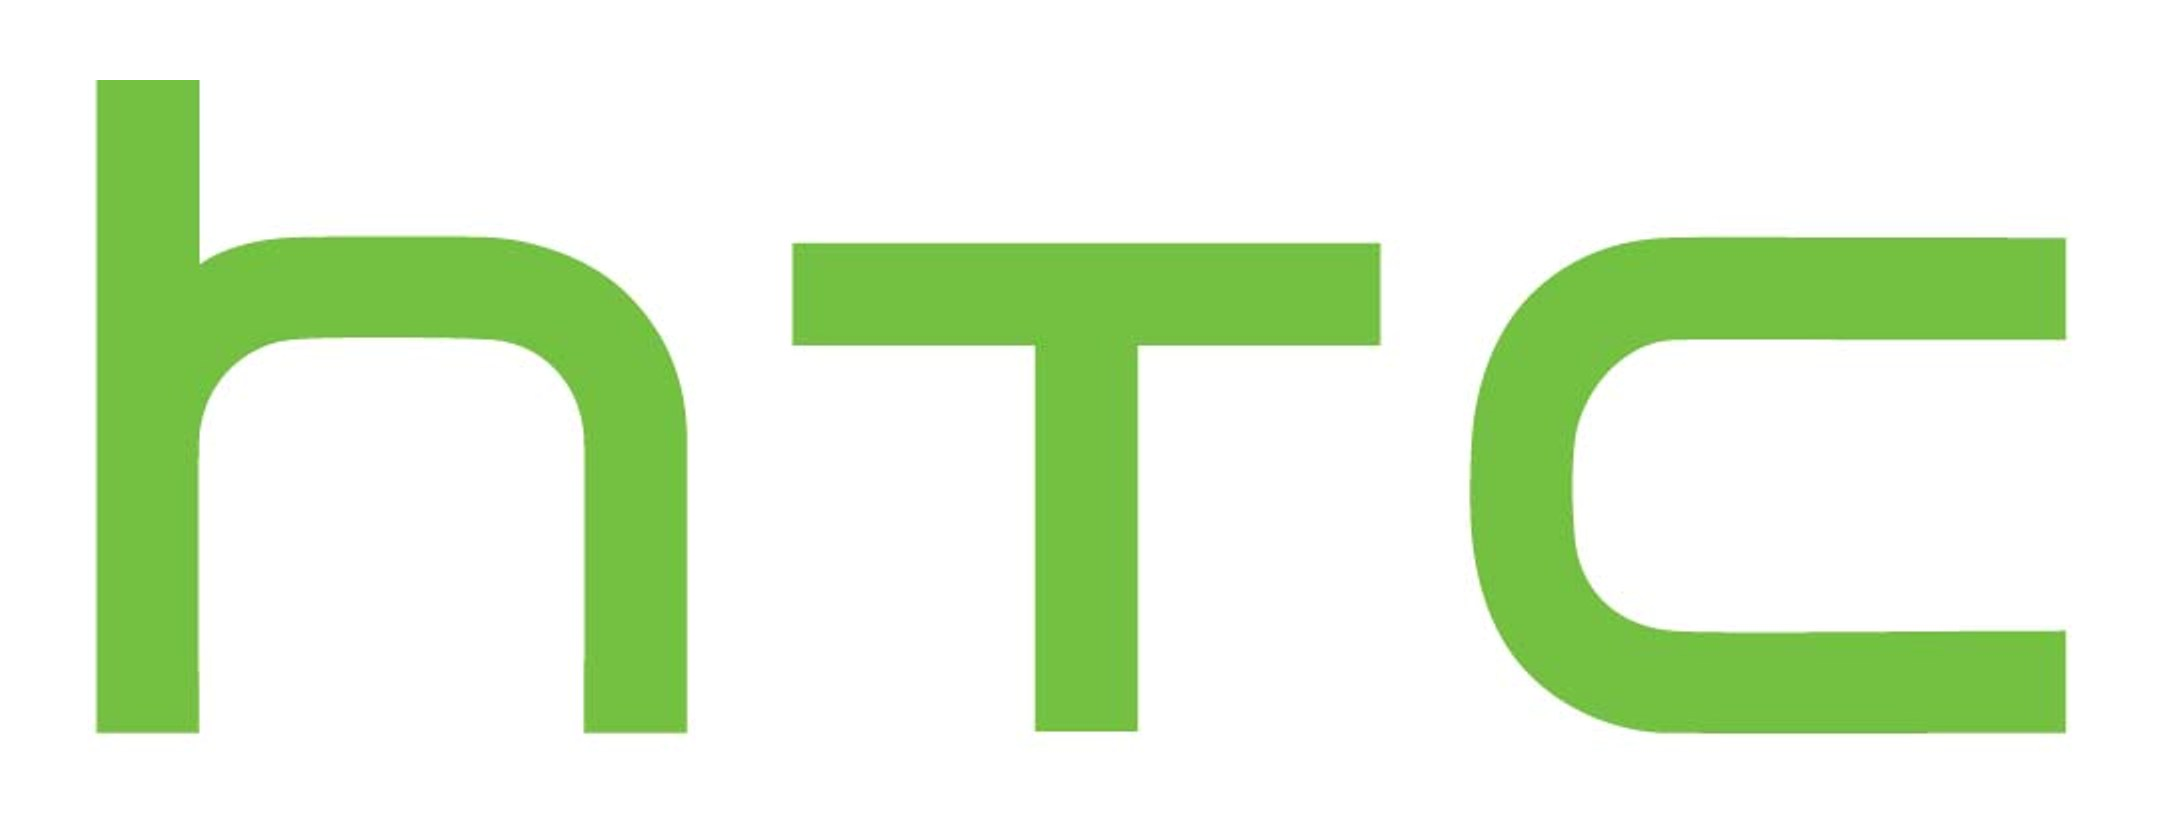 HTC-1